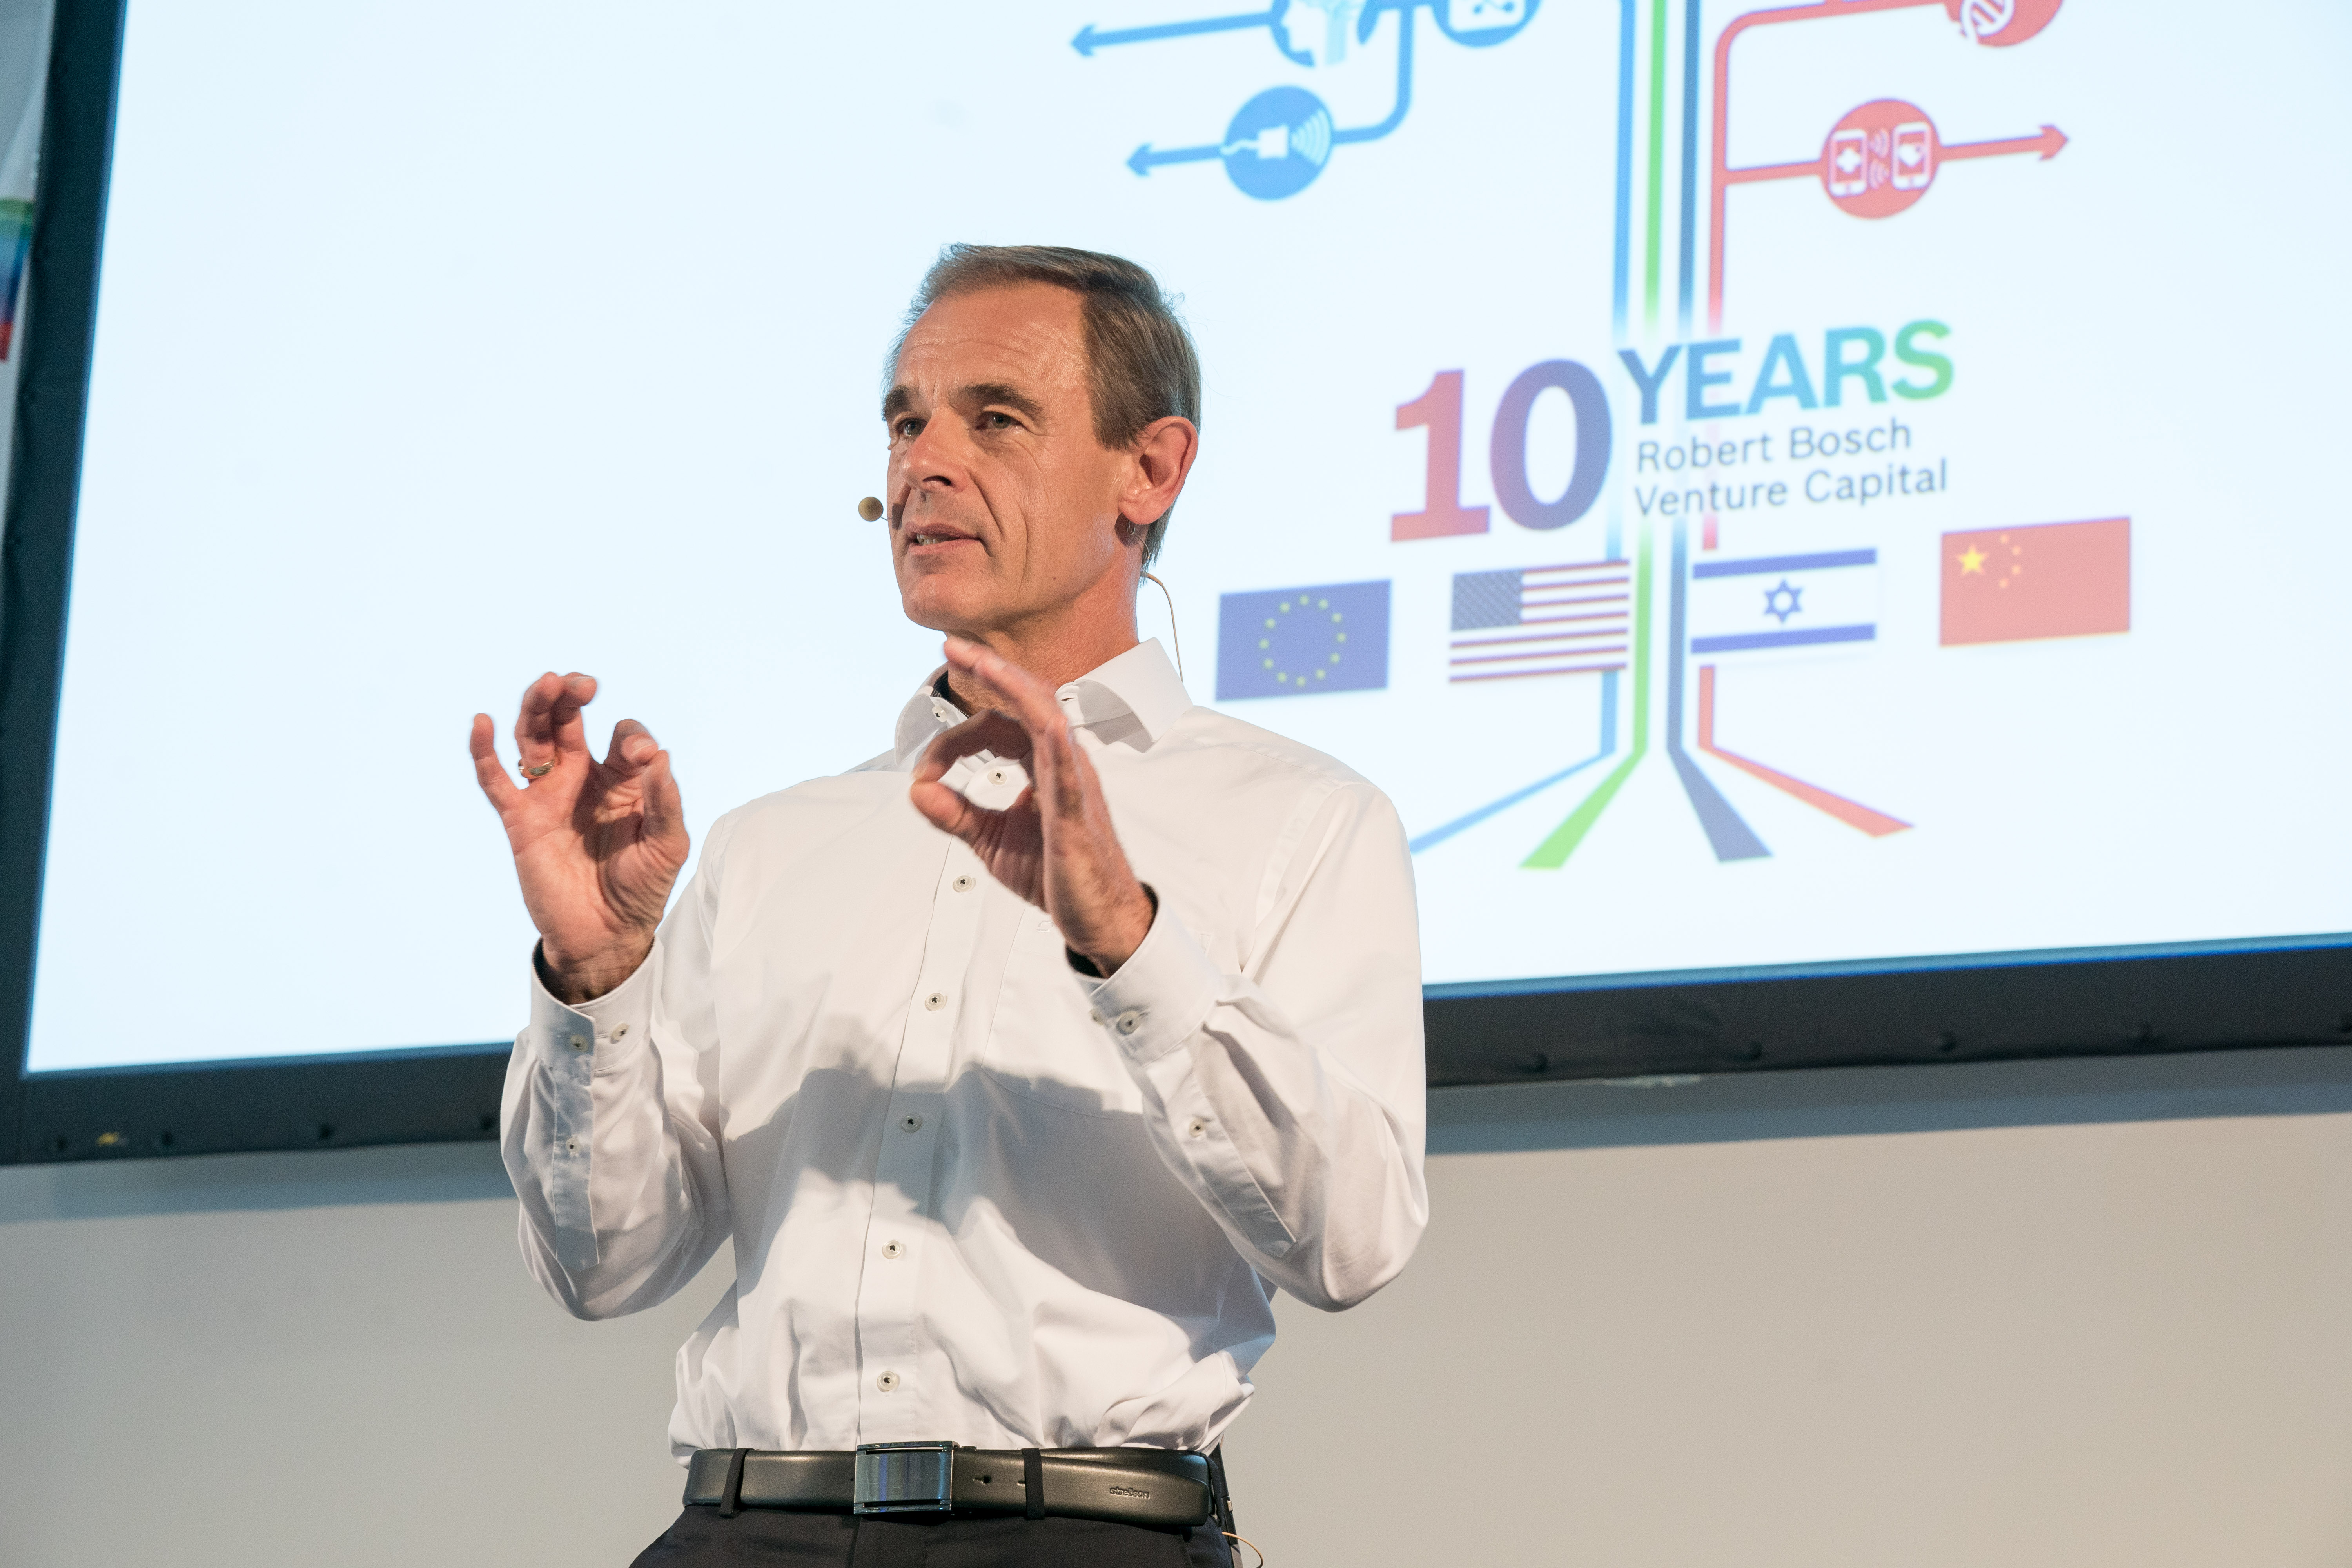 10 years Robert Bosch Venture Capital: Dr. Volkmar Denner